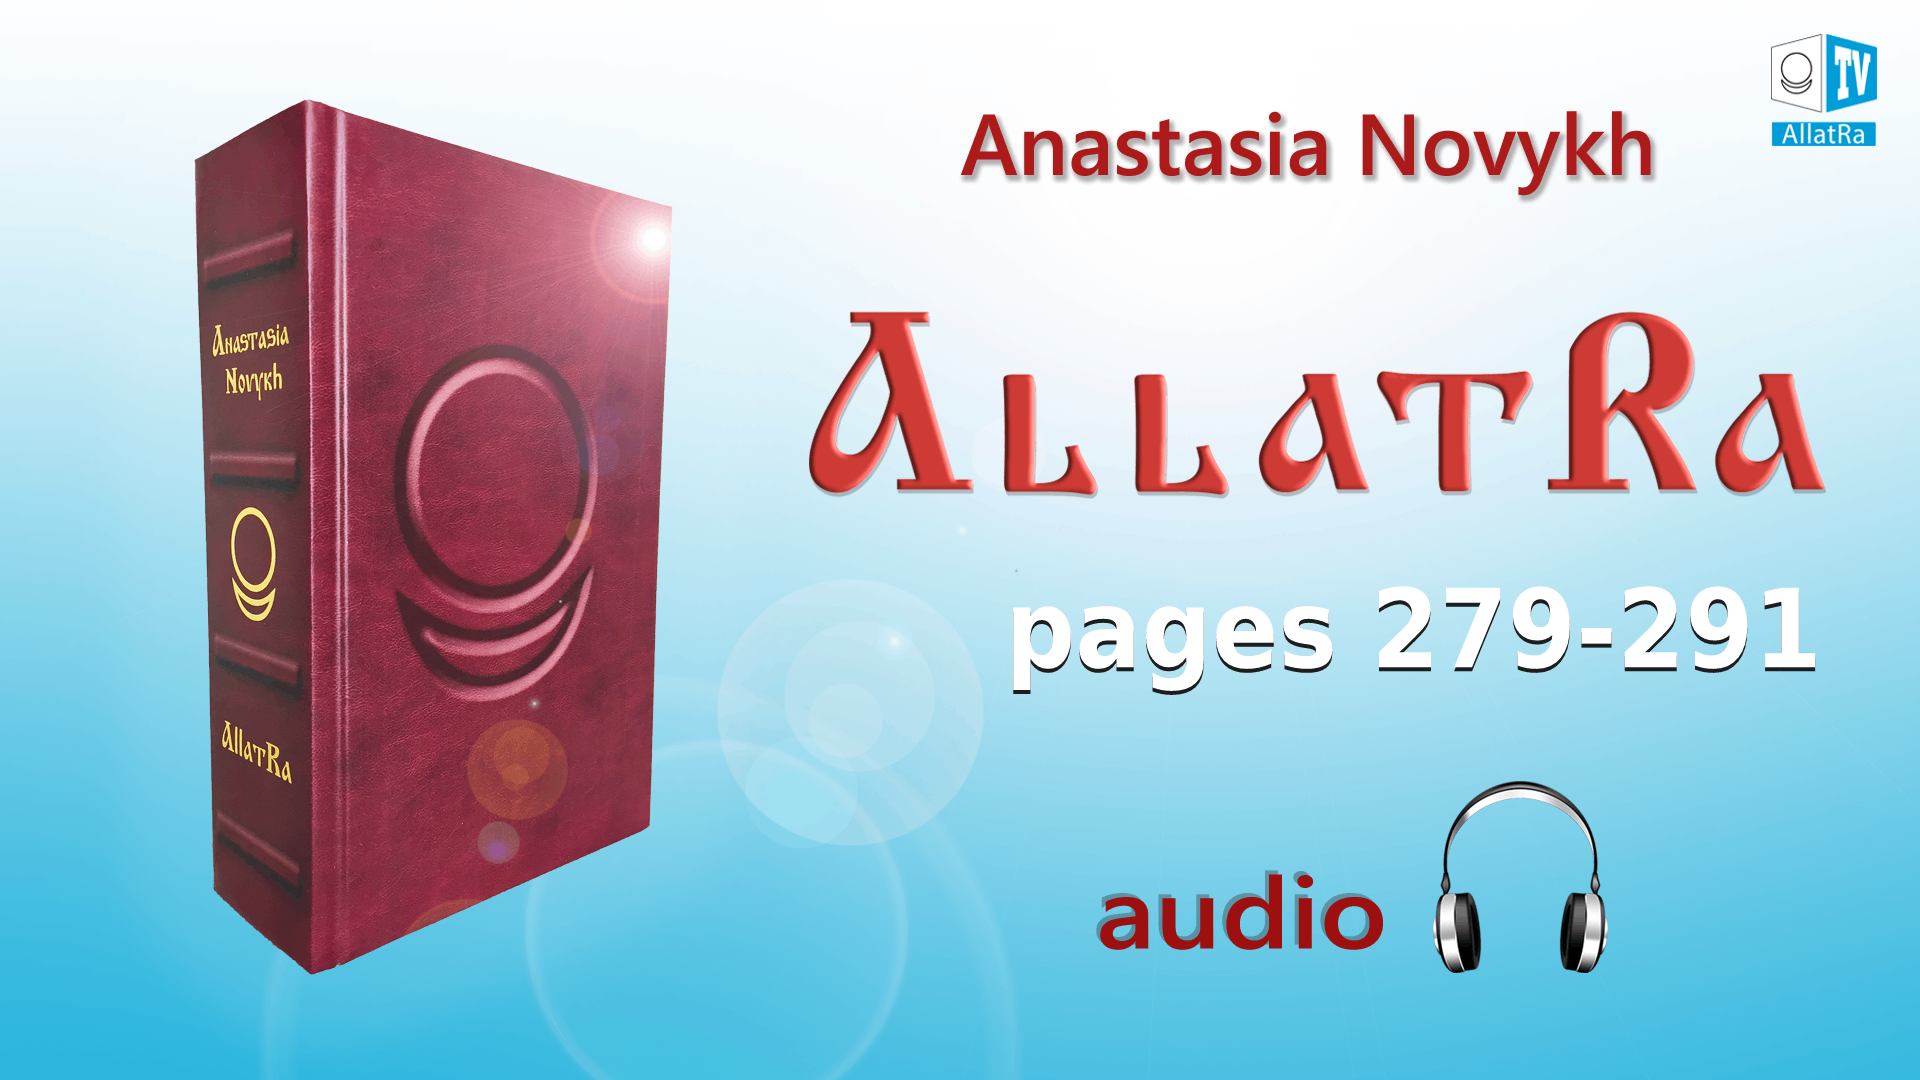 АllatRa. Anastasia Novykh. Audiobook. Pages 279-291